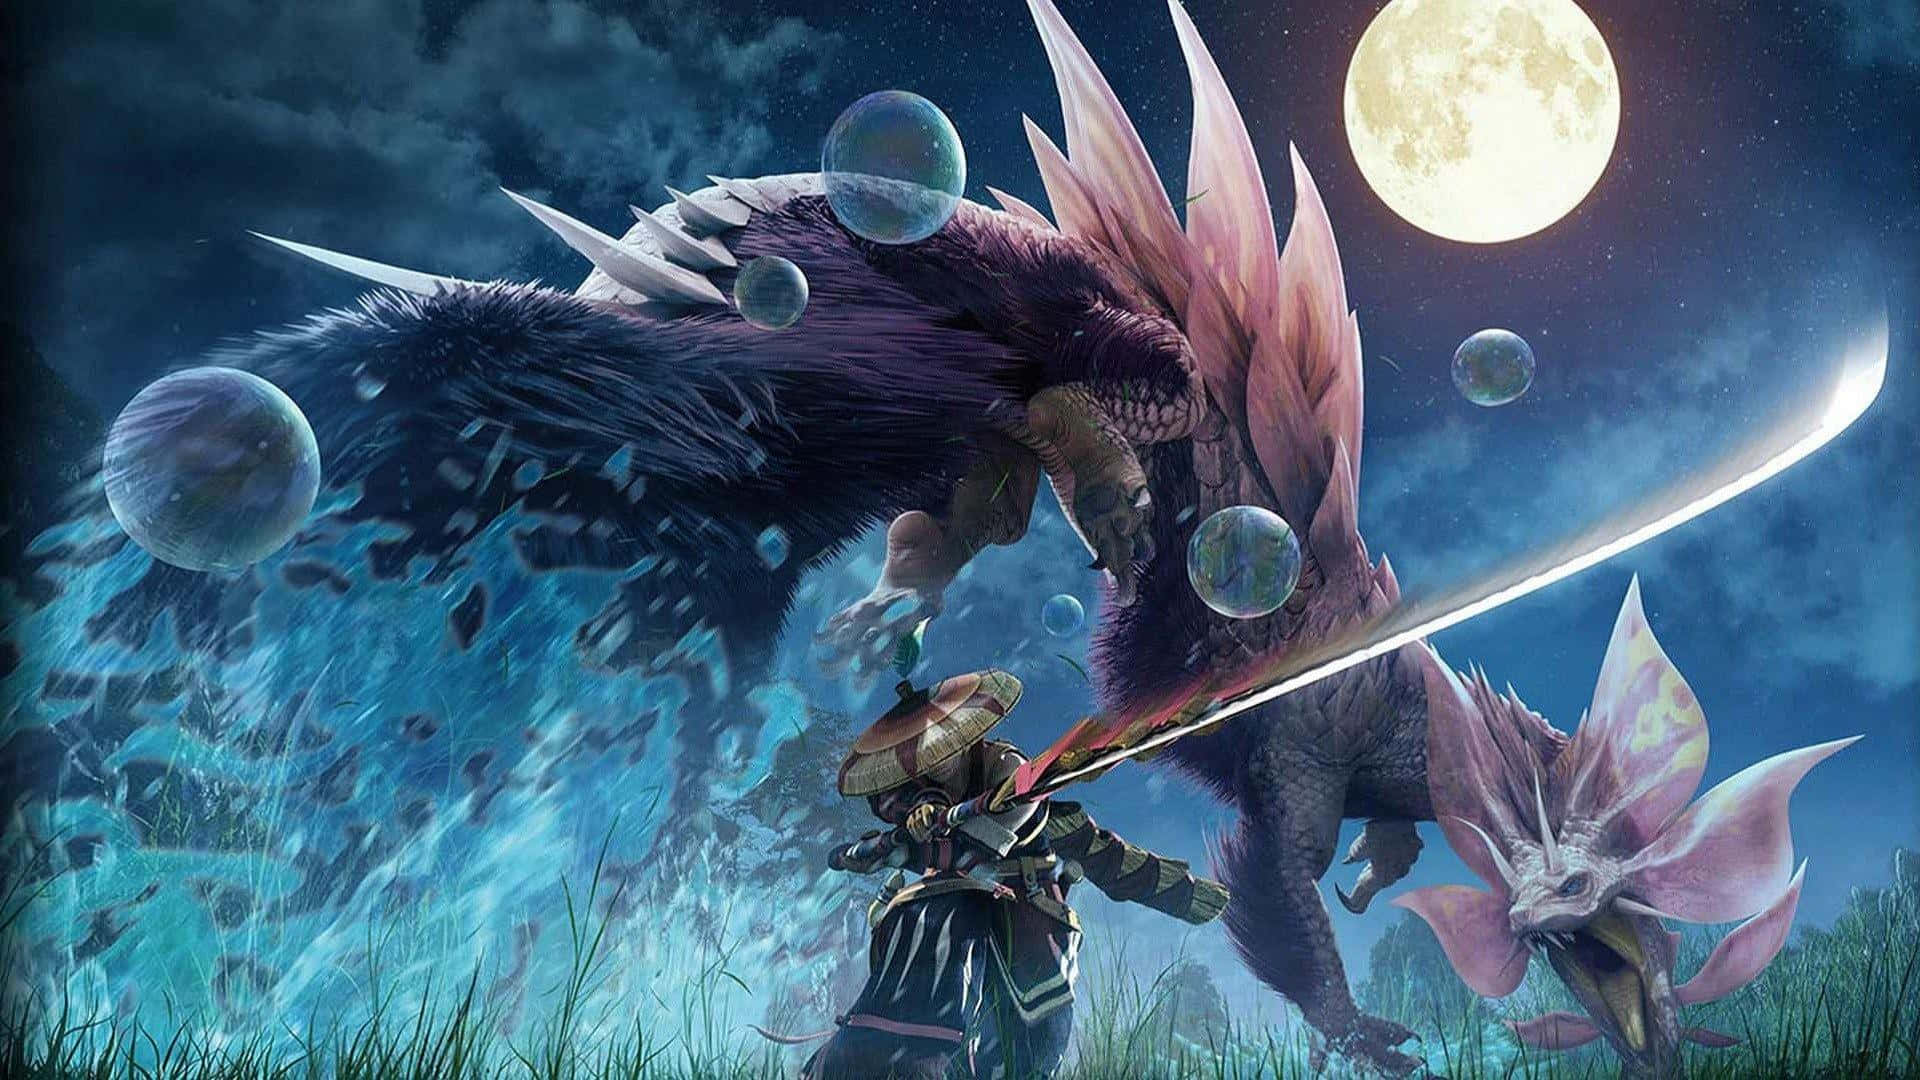 Fierce Monsters Engaging in Battle in Monster Hunter Wallpaper